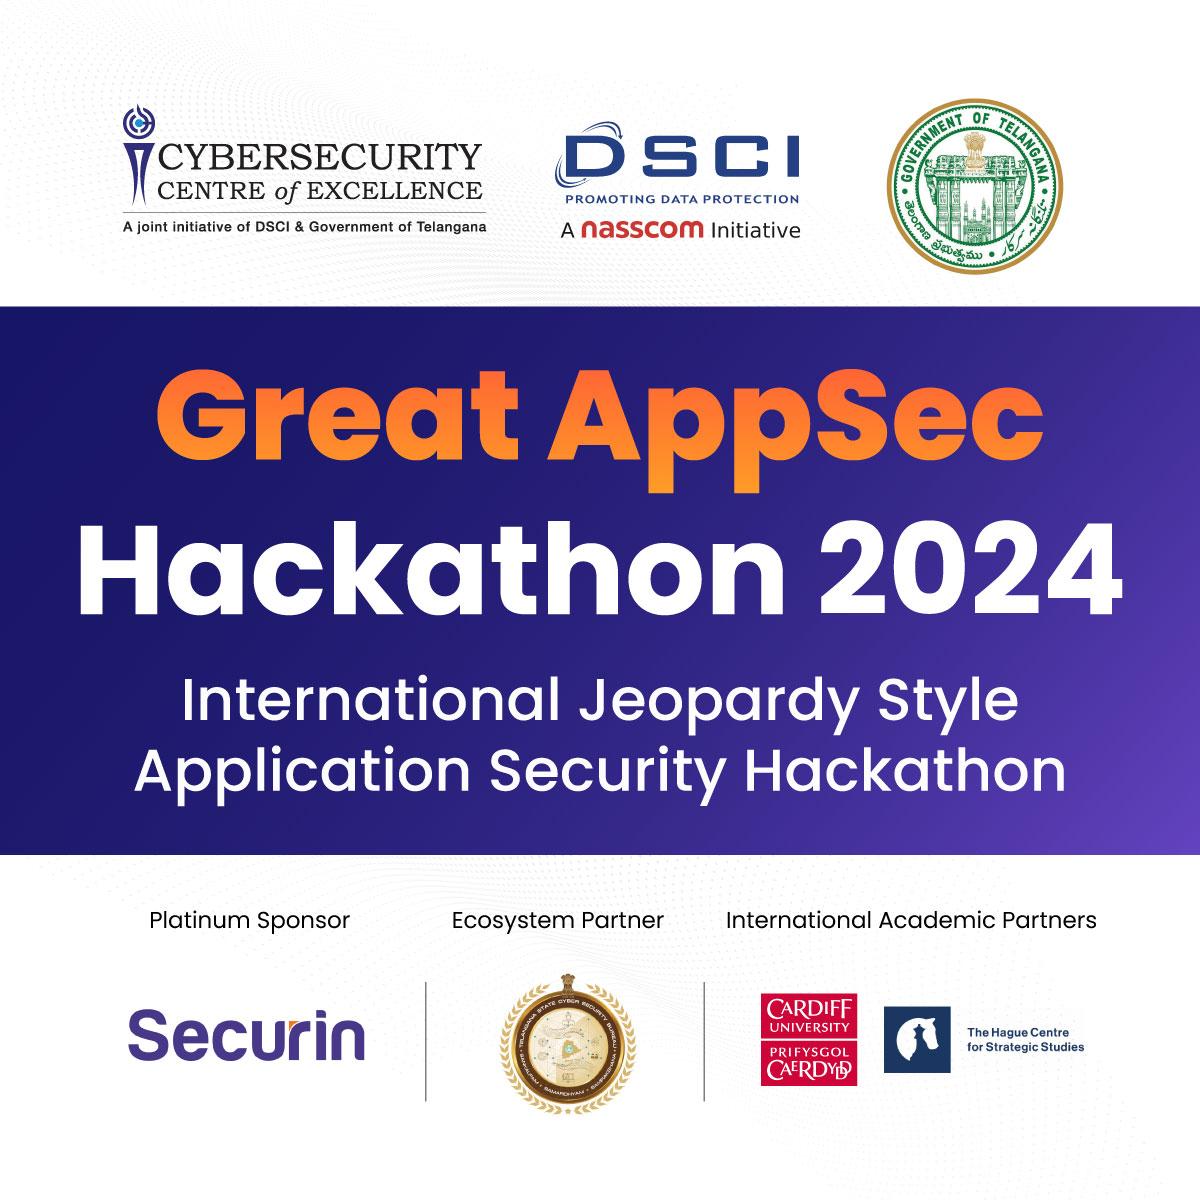 Great AppSec Hackathon